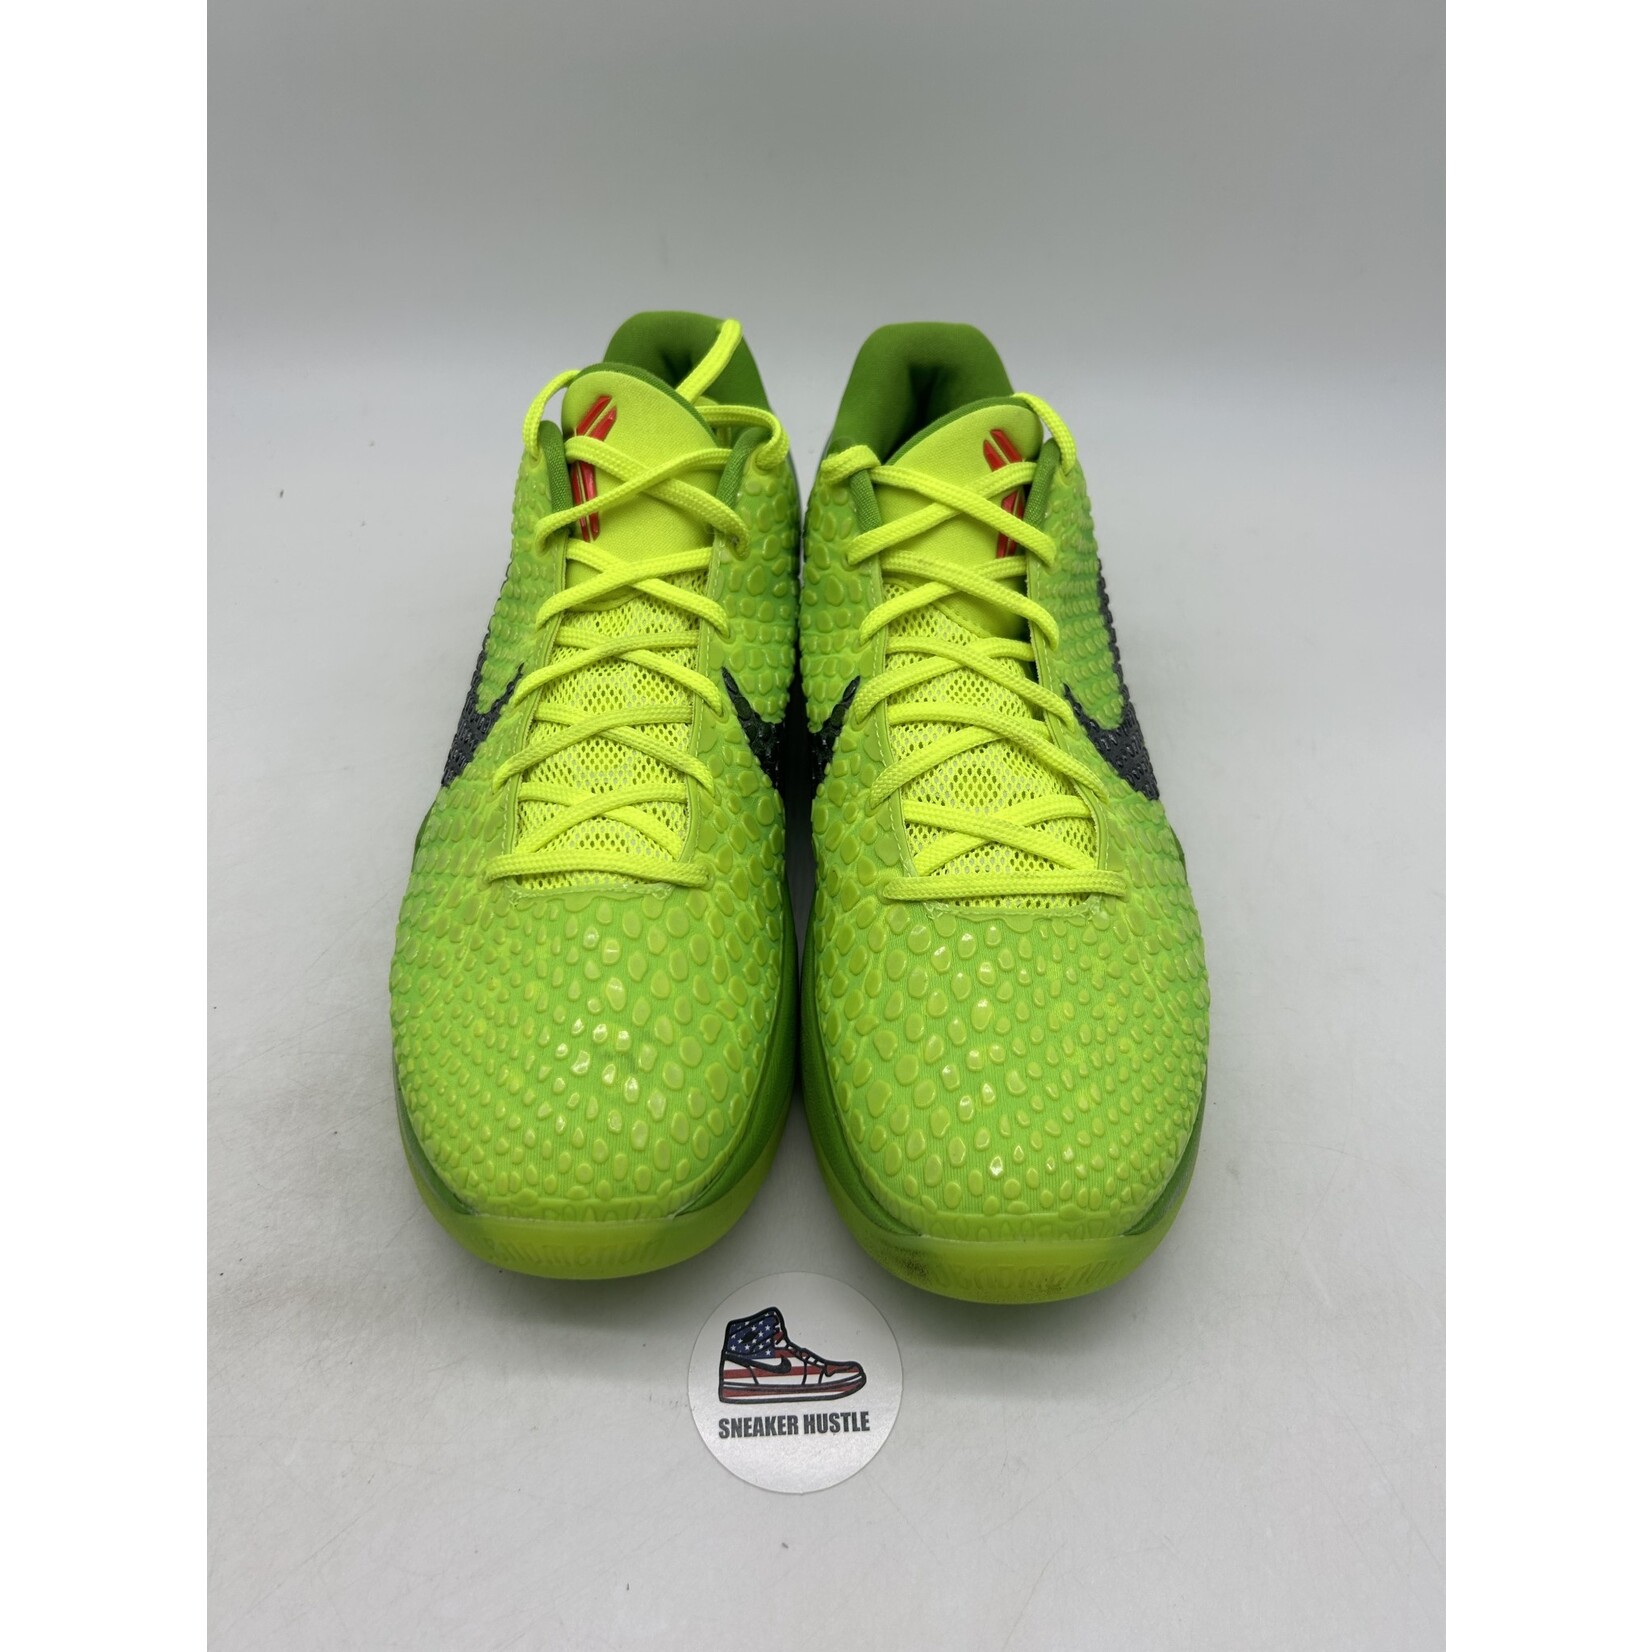 Nike Nike Kobe 6 Protro Grinch (2020)